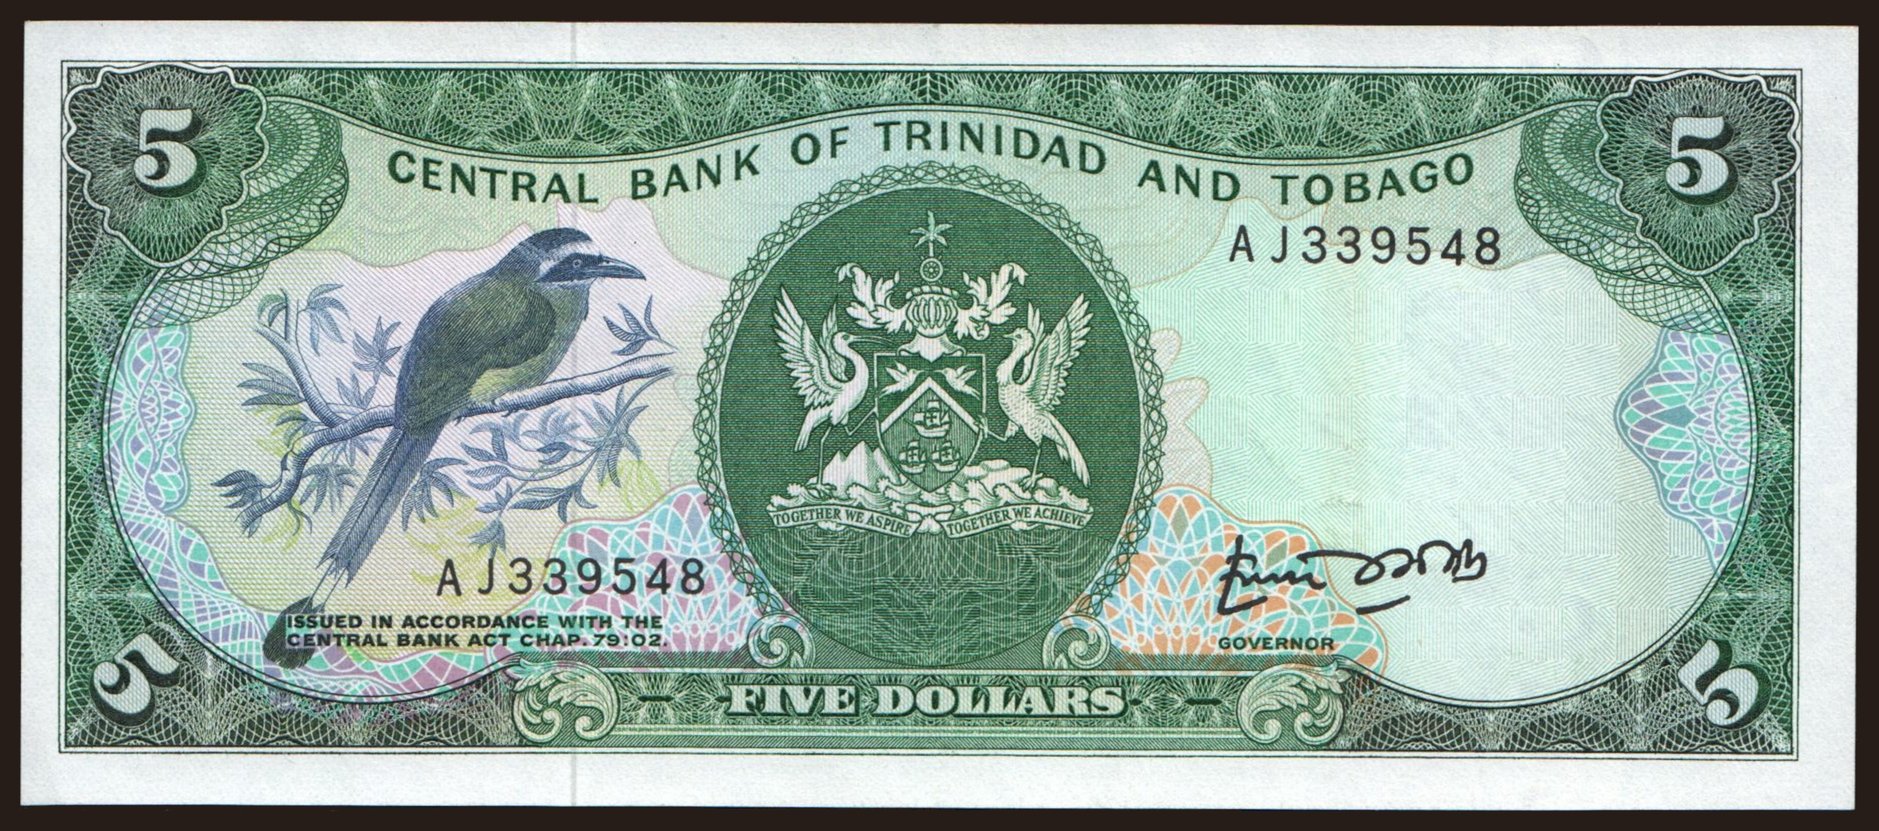 5 dollars, 1985